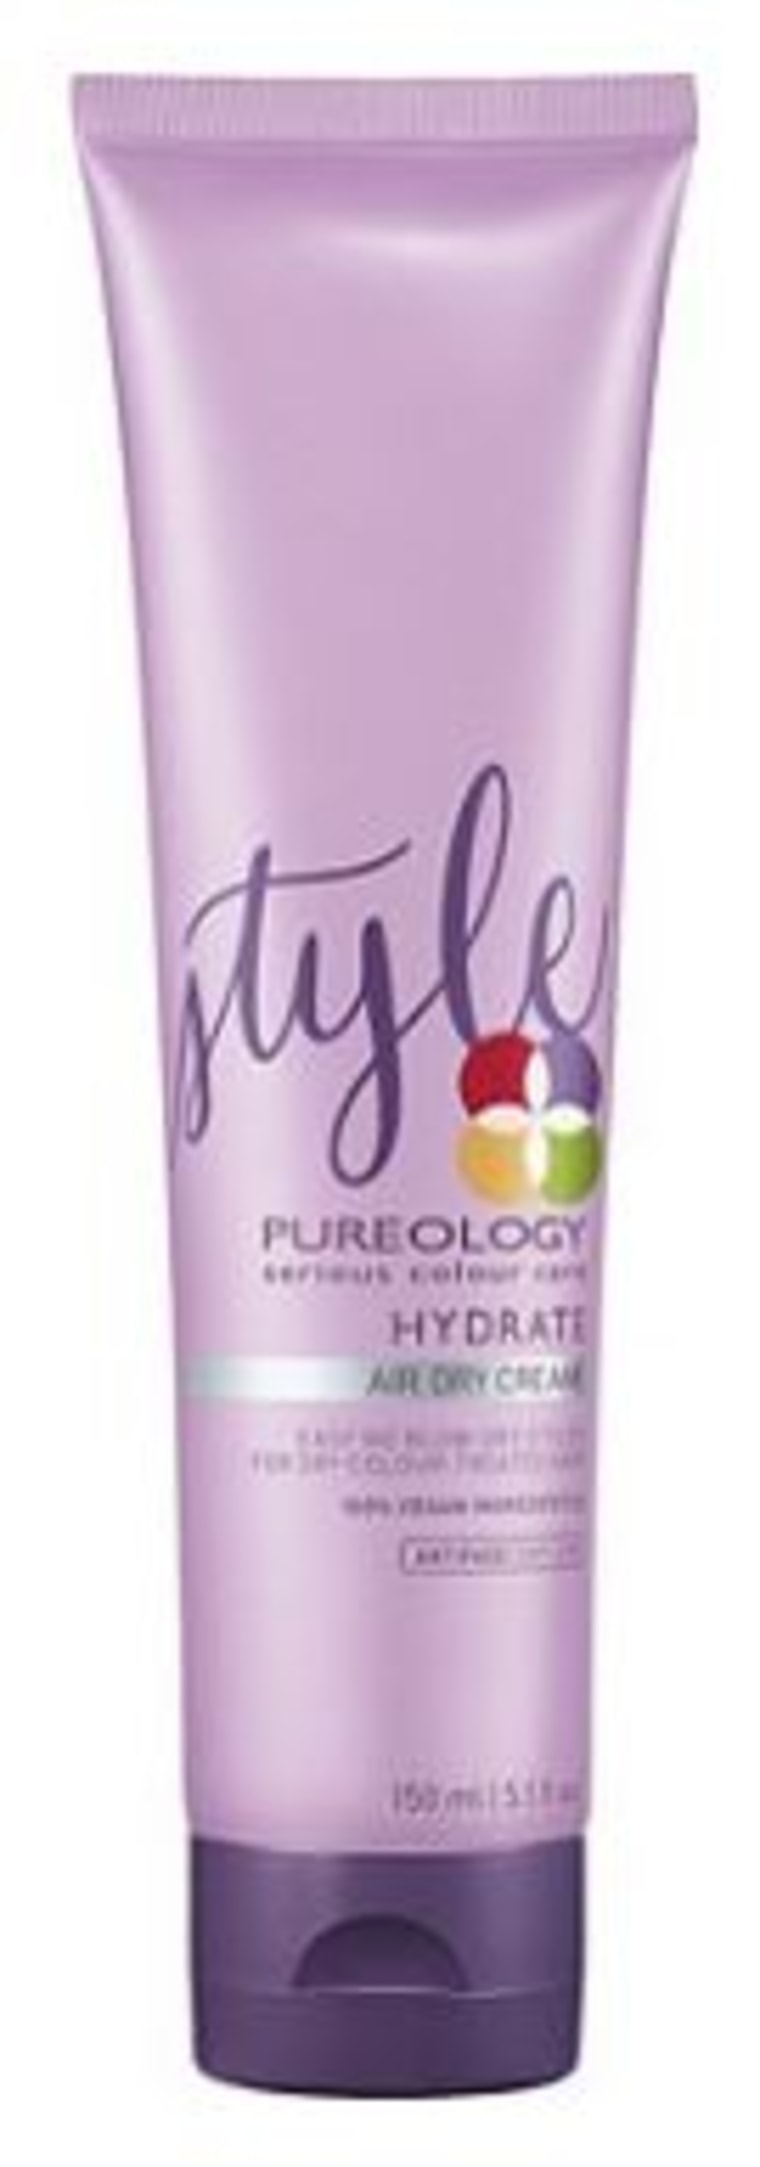 Pureology Air Dry cream